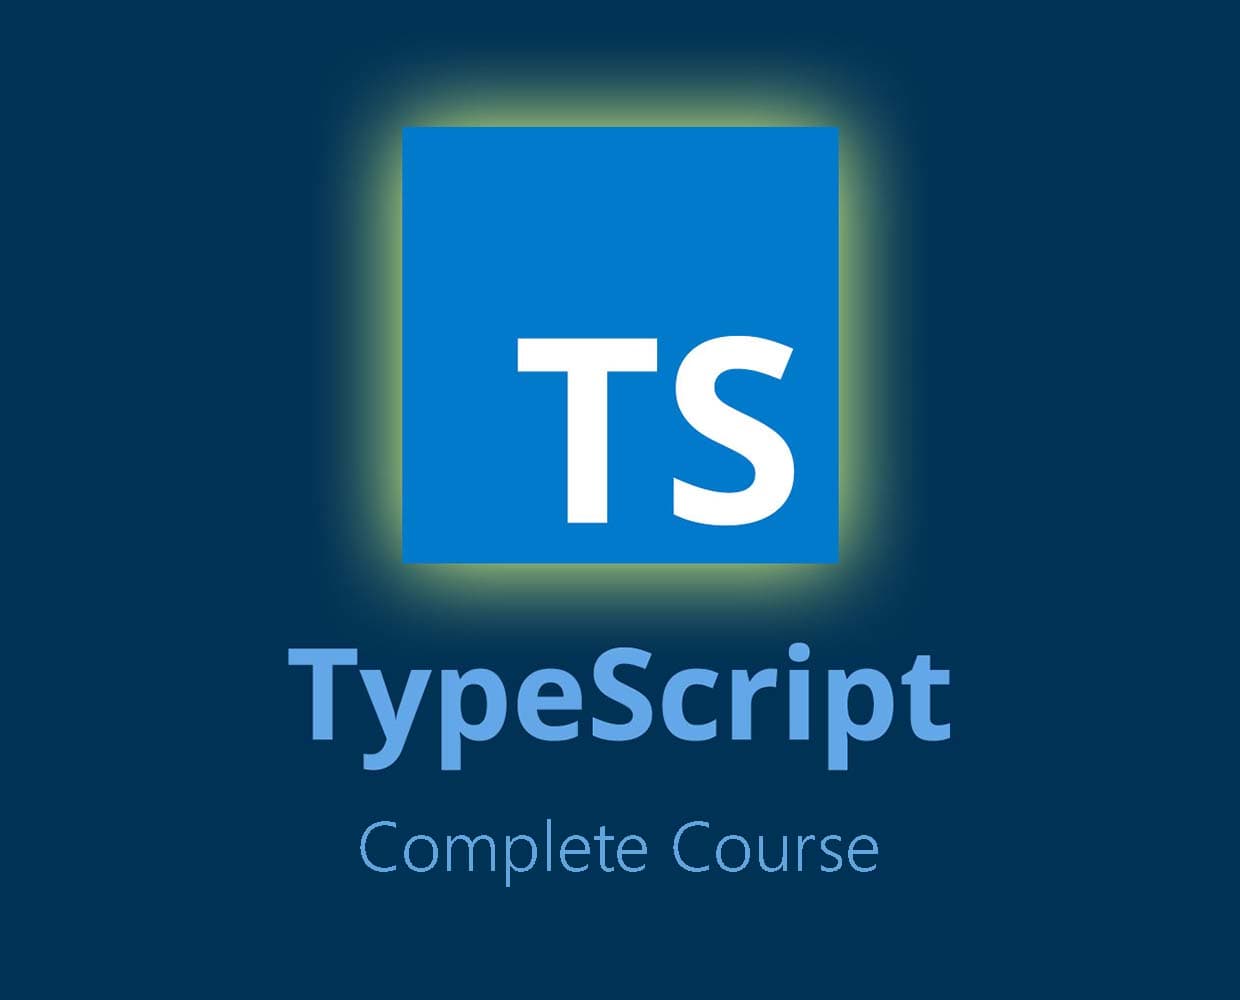 Redux typescript. Программирование на TYPESCRIPT. TYPESCRIPT основы. Тайпскрипт. TYPESCRIPT обои.